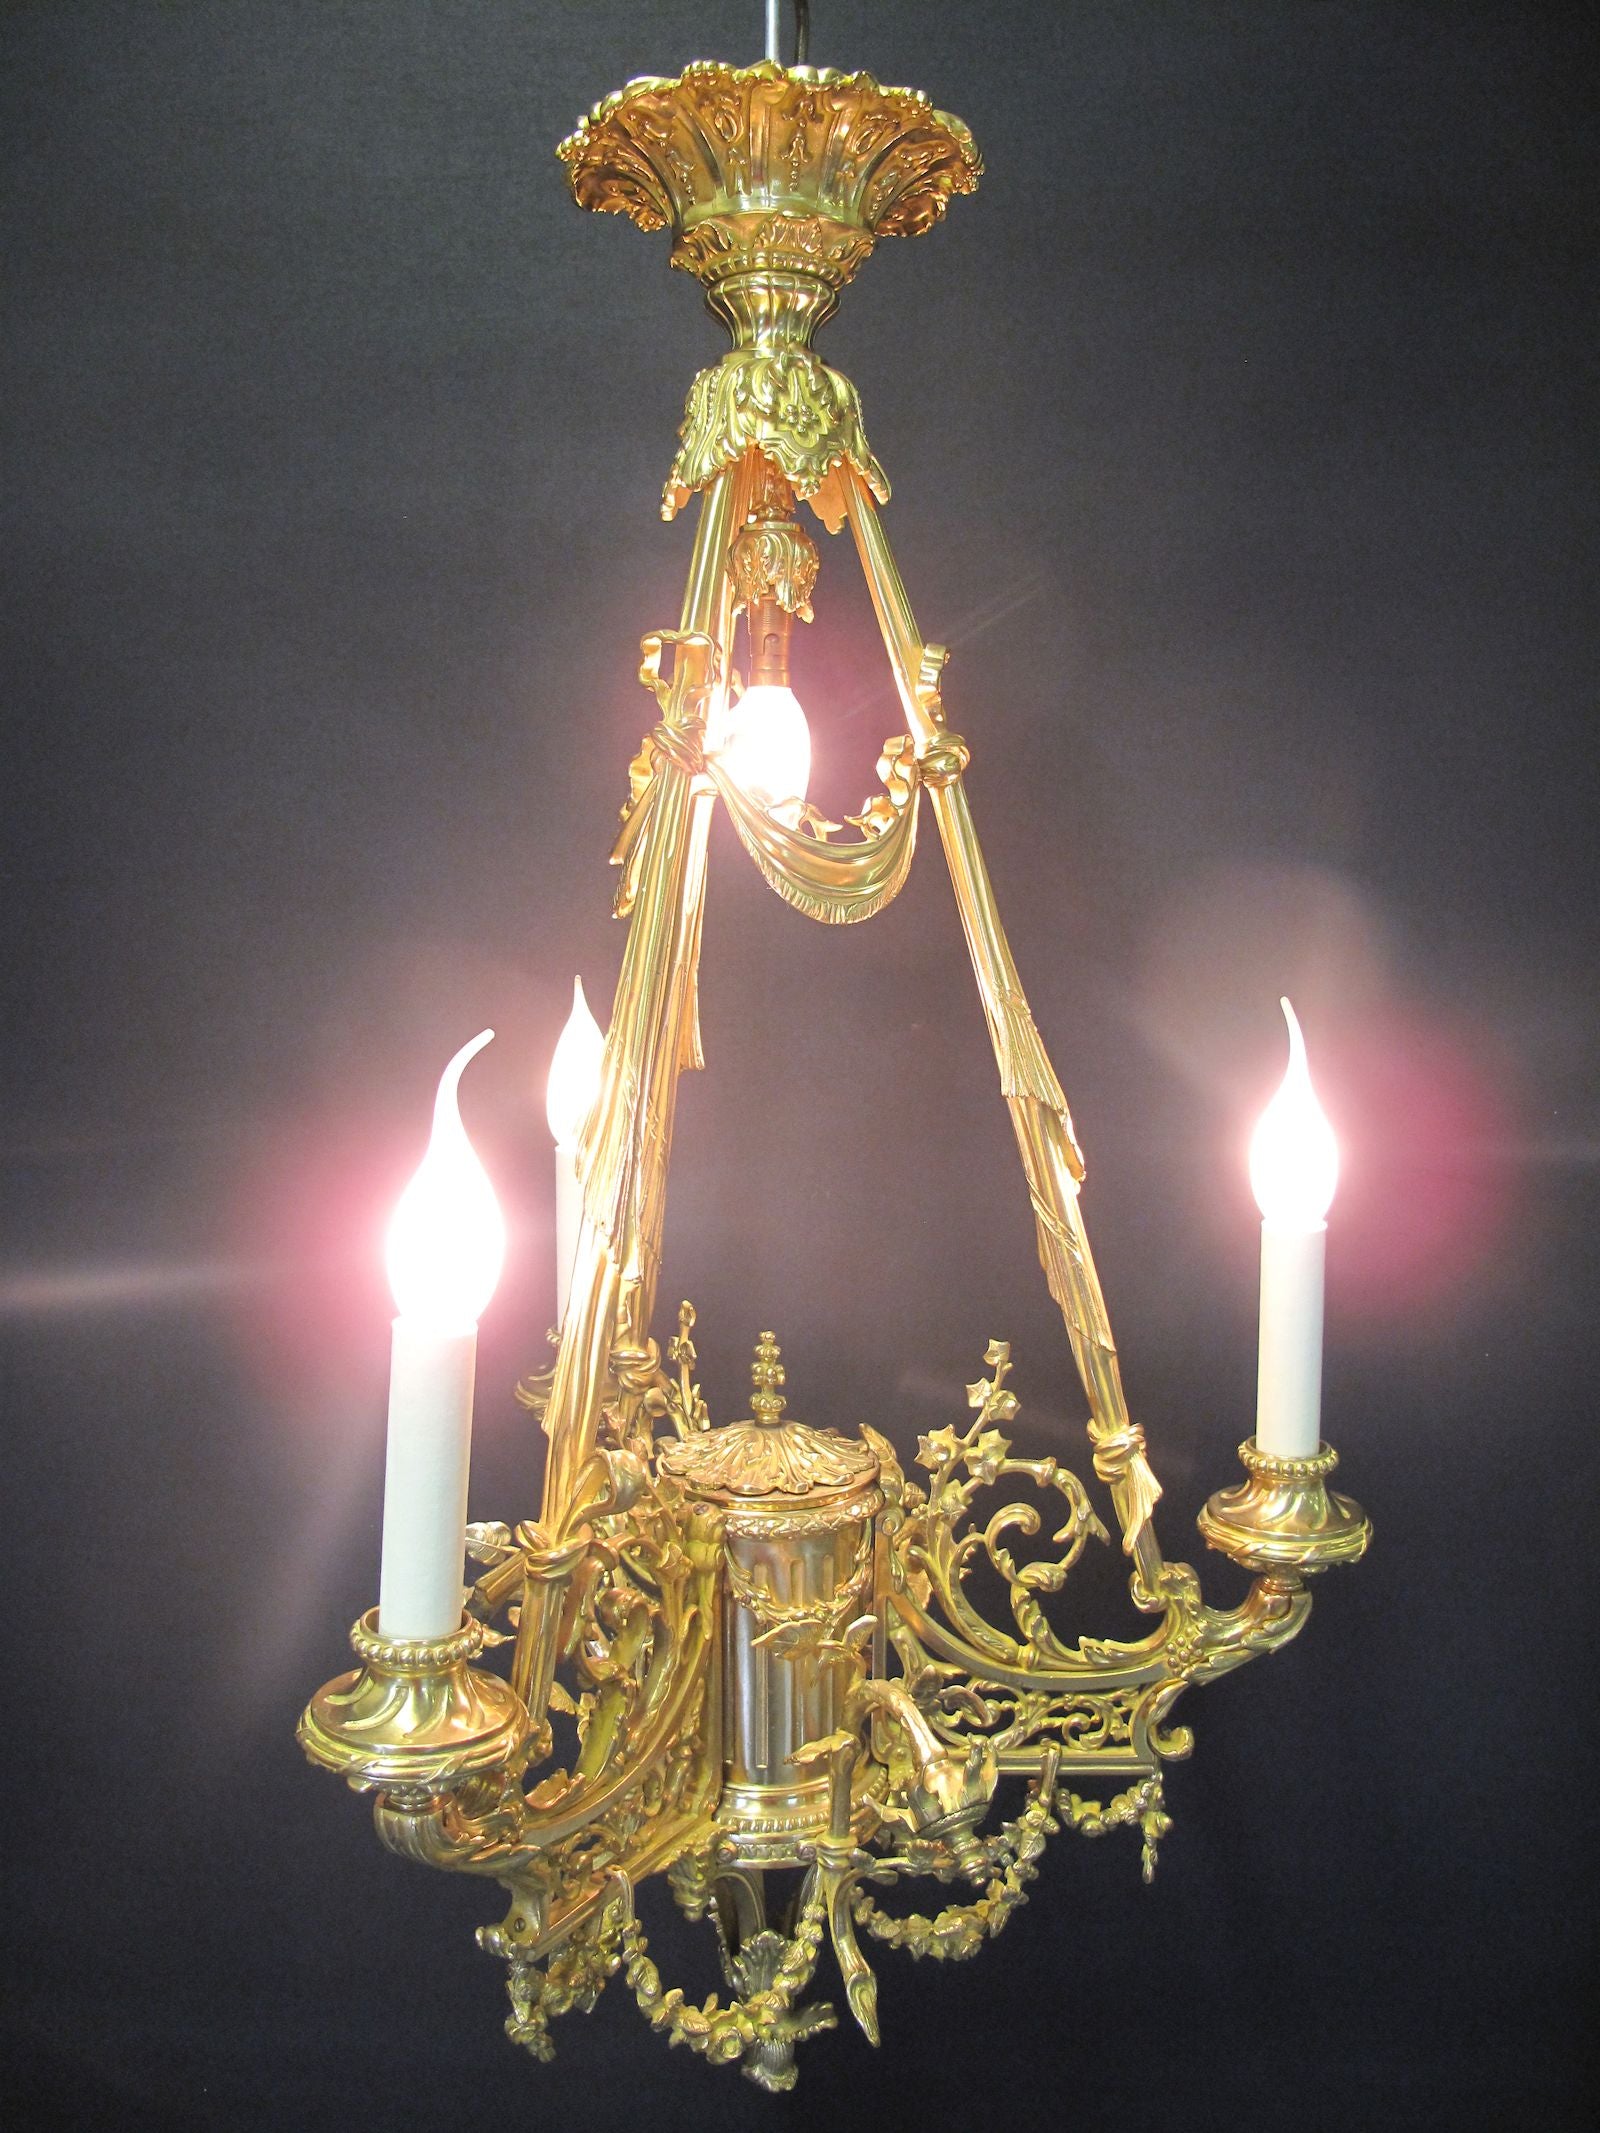 3 arm polished brass chandelier, lit up